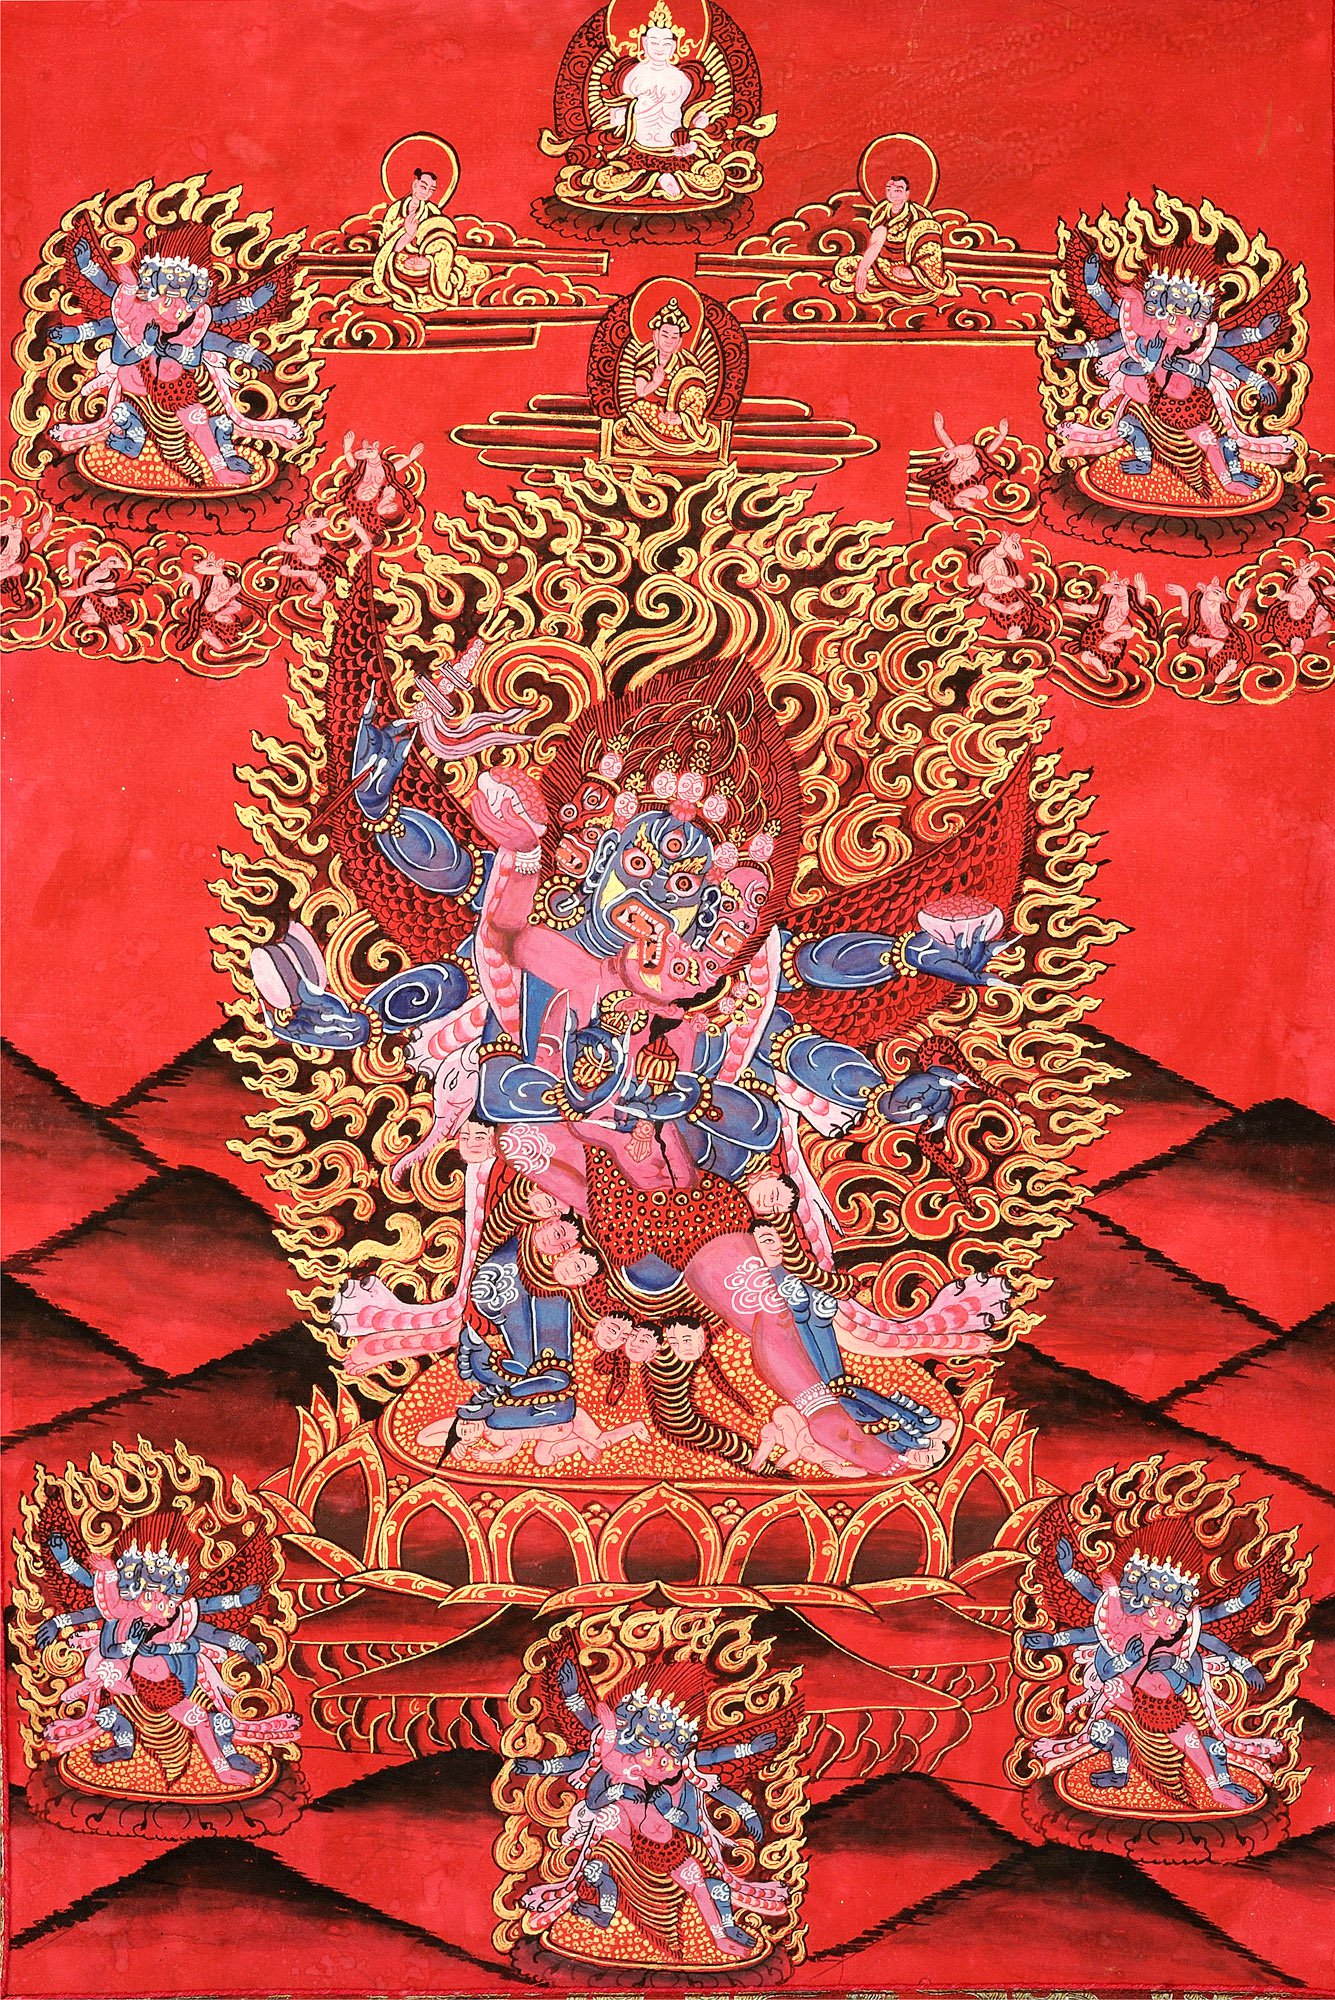 Six-Armed Winged (Tibetan Buddhist) Mahakala in Yab Yum